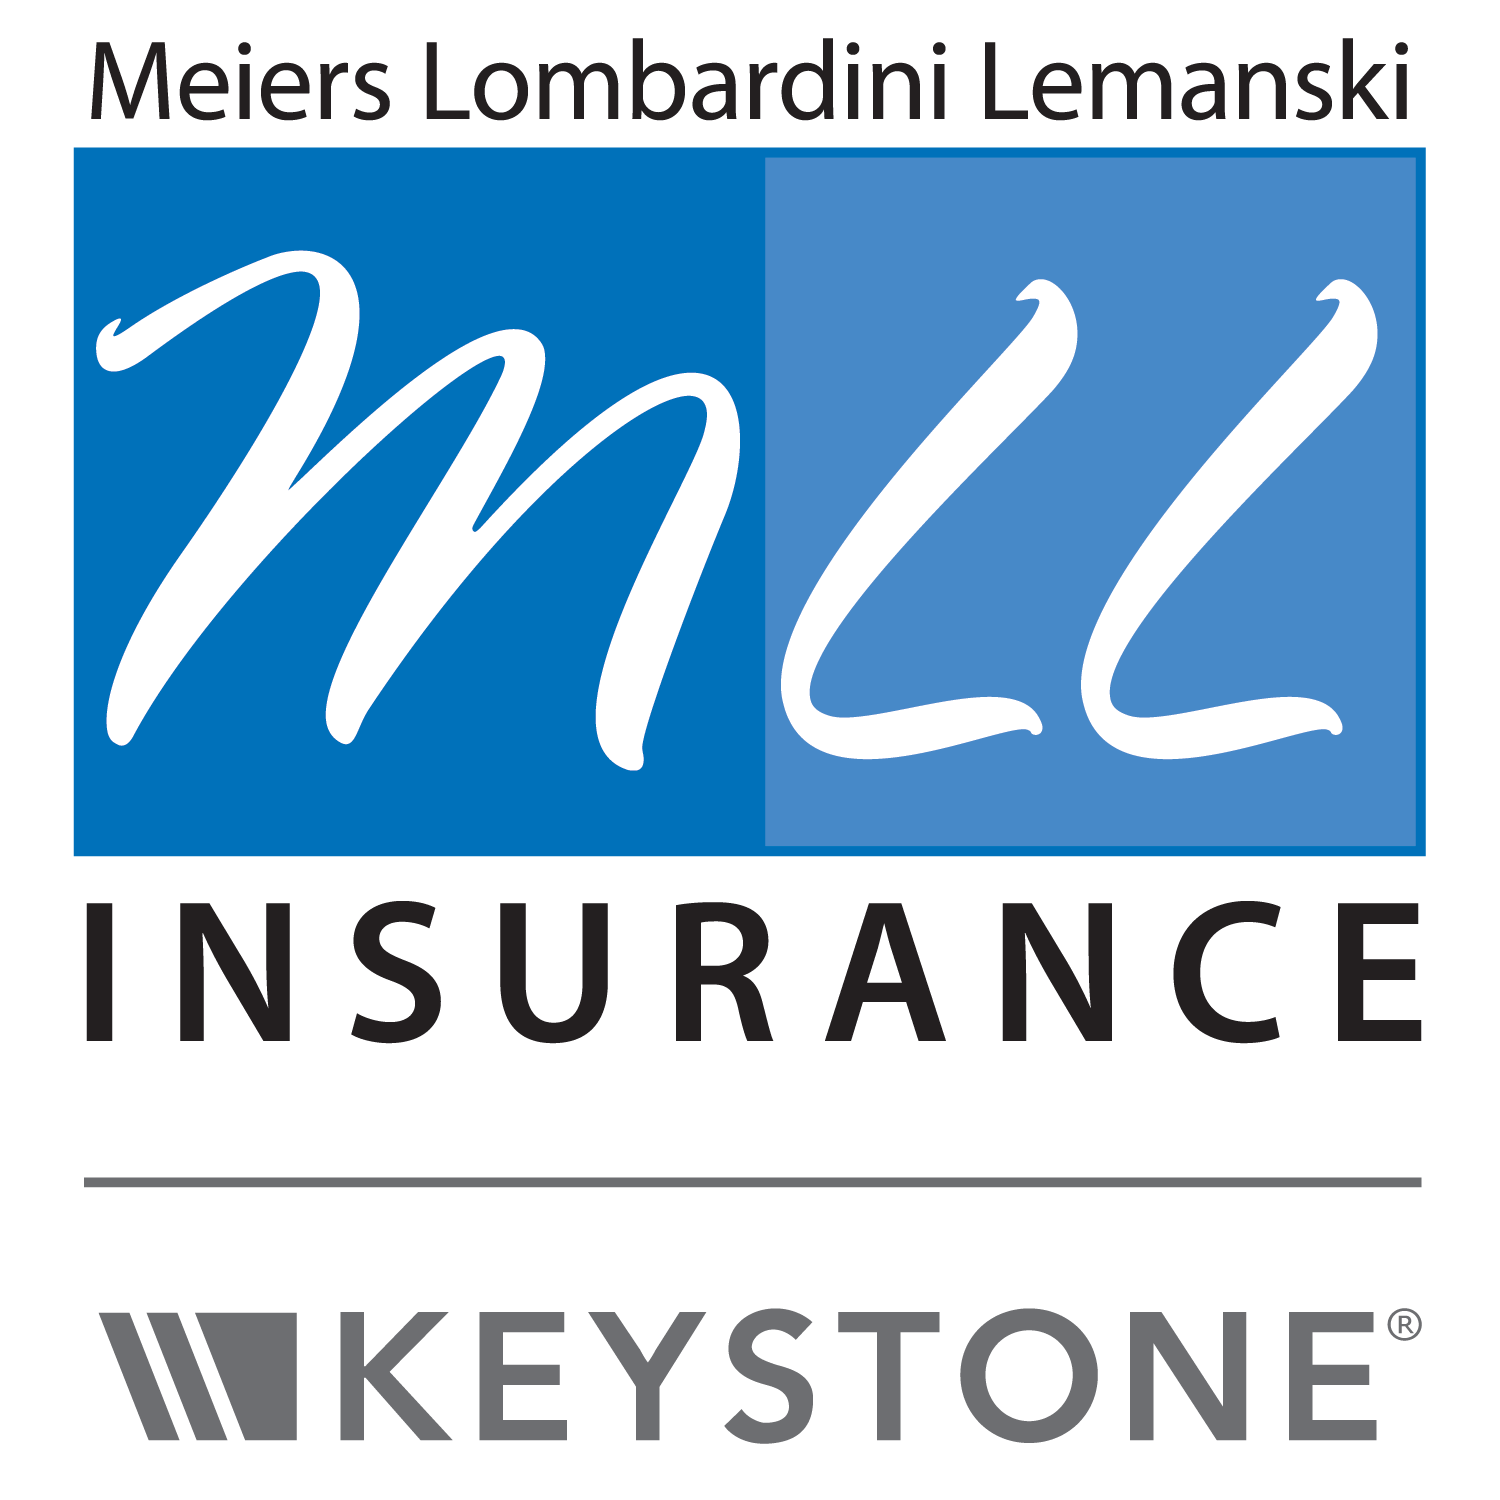 Meiers Lombardini Lemanski Insurance